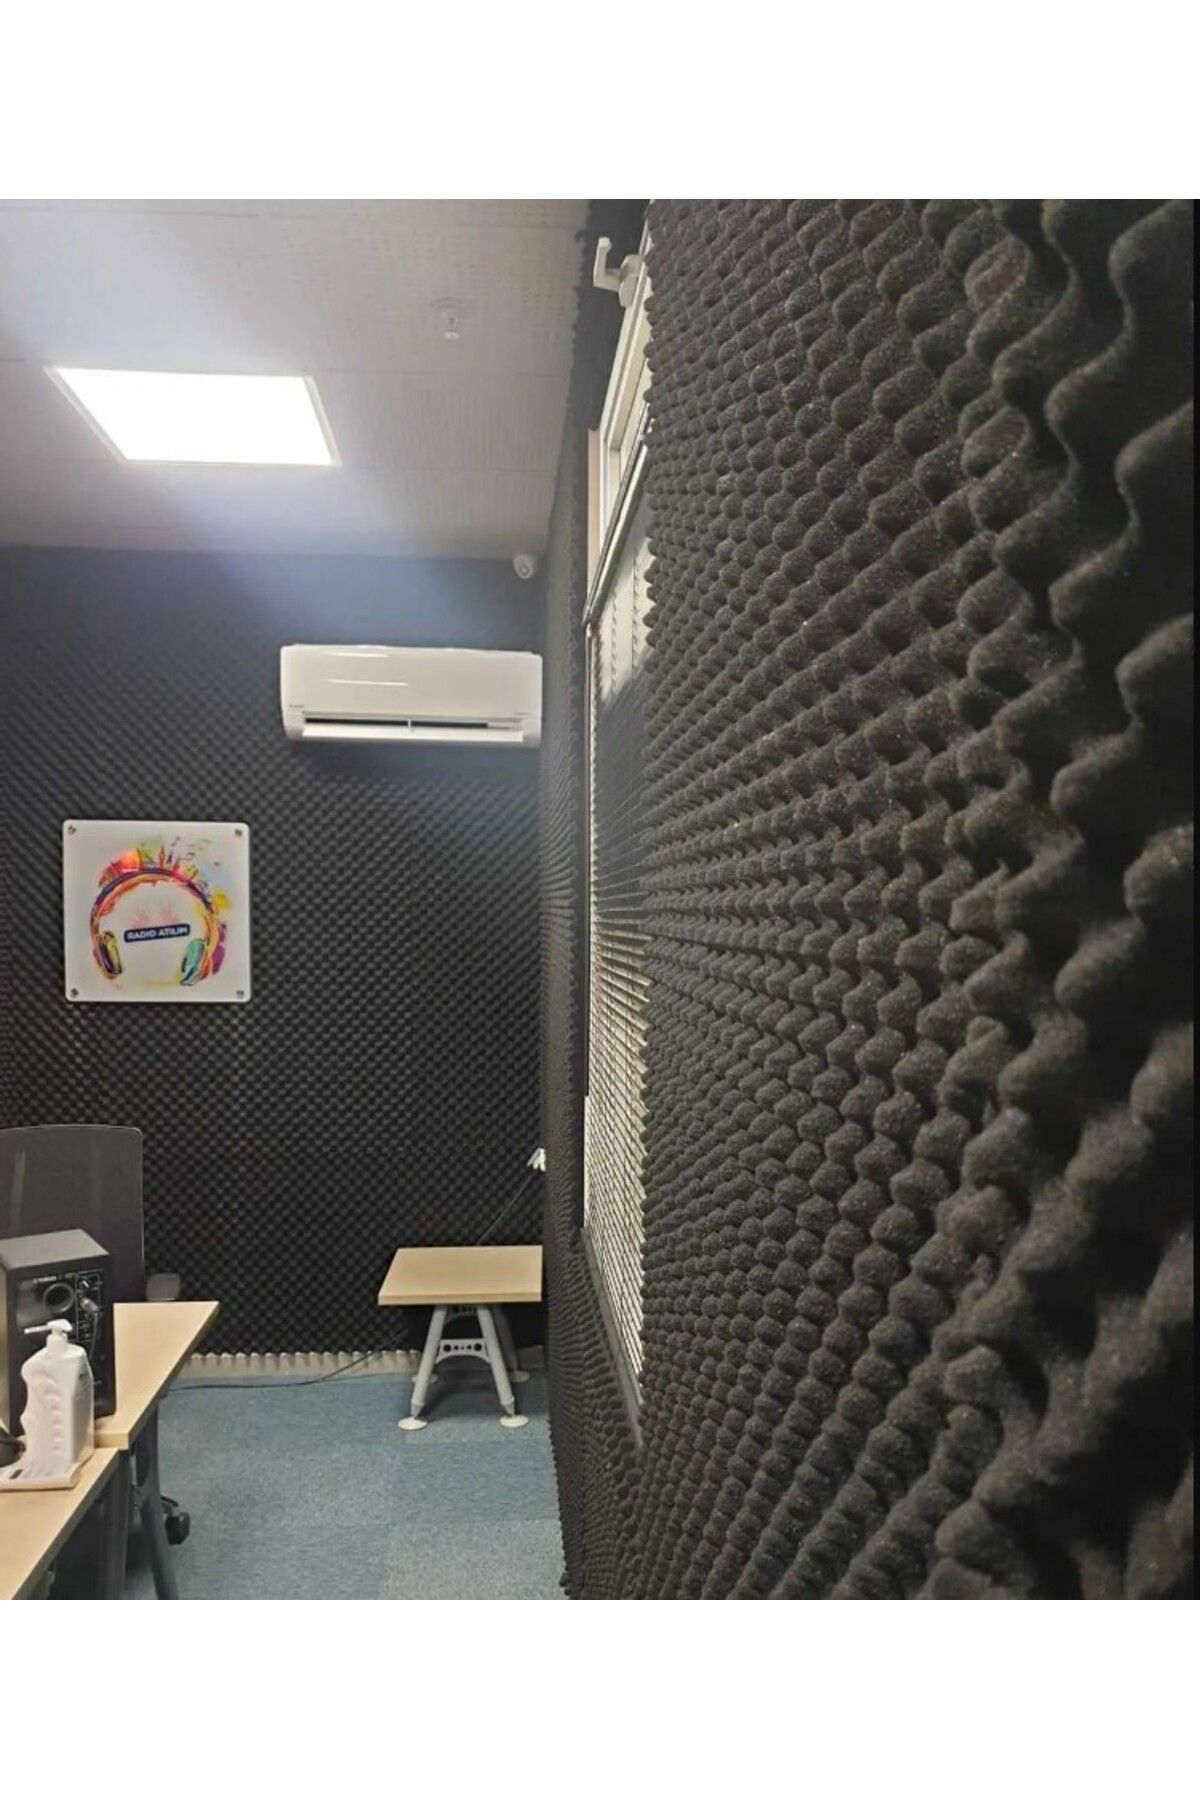 KL HOME 1m2-ev Ofis Stüdyo Akustik Yumurta Sünger Ses Yalıtım 100x100cm 50mm Kalınlık 50dns Yoğunluk